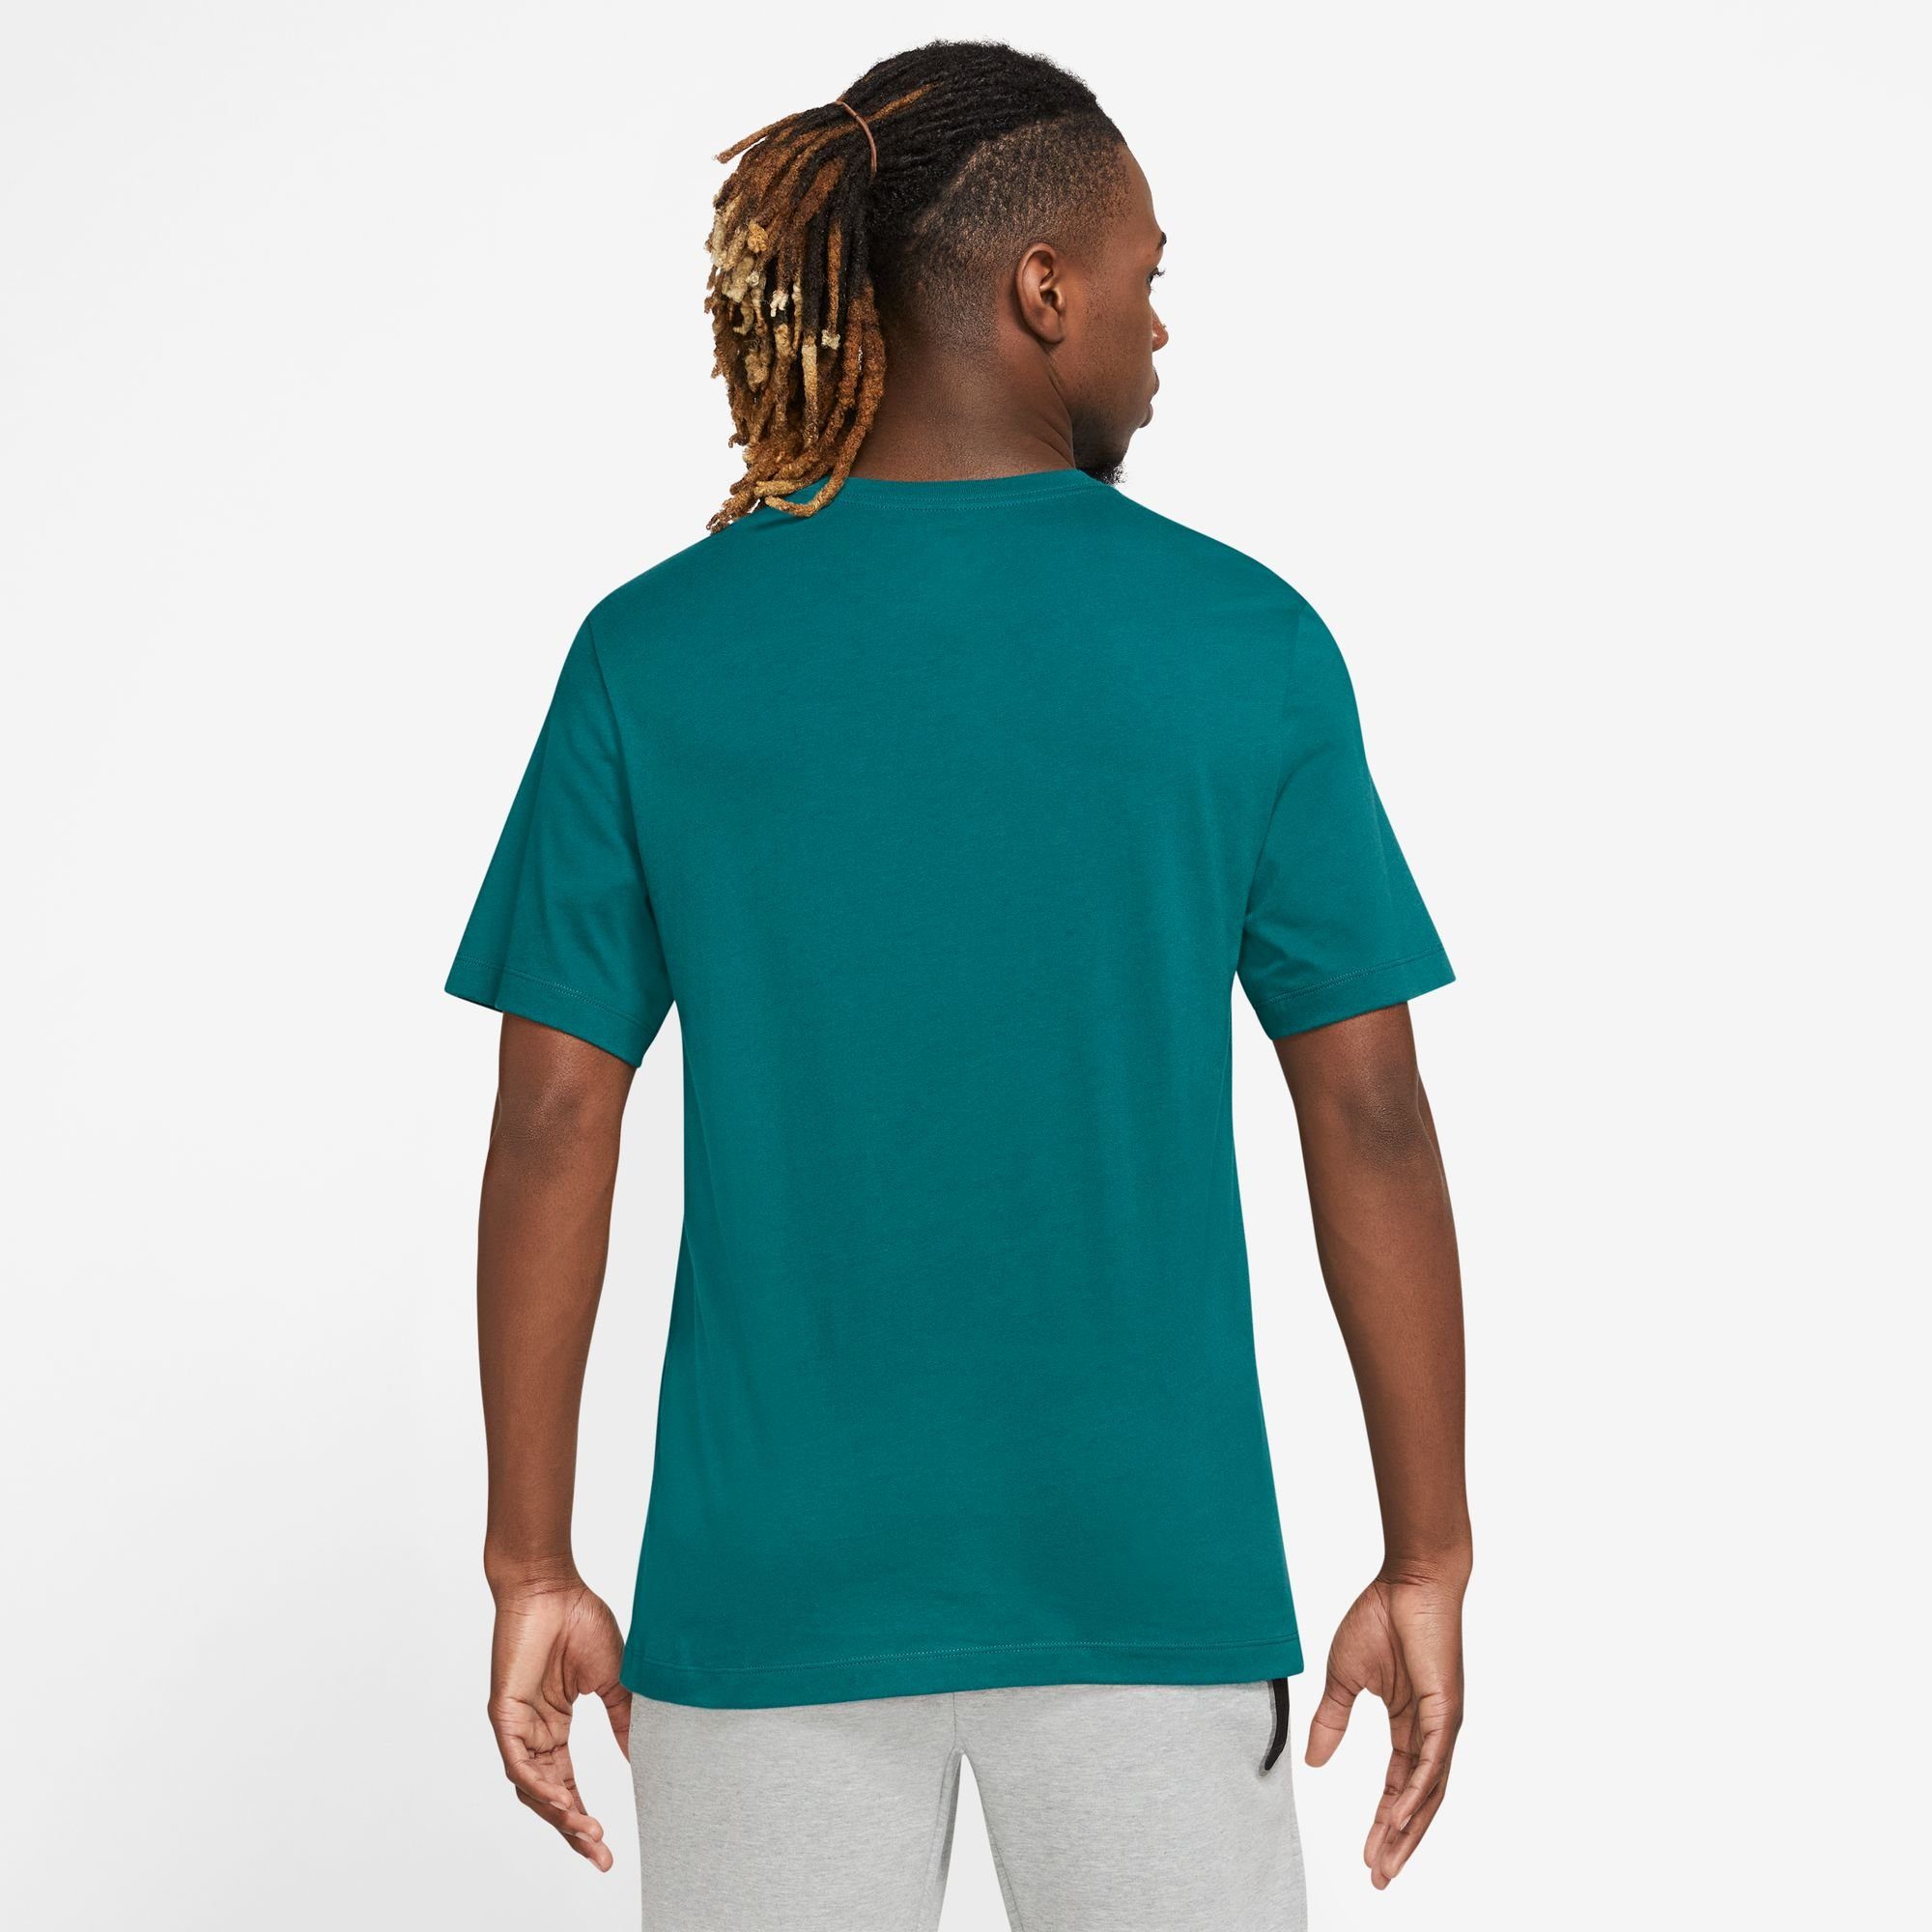 GEODE MEN'S Nike T-Shirt TEAL T-SHIRT Sportswear